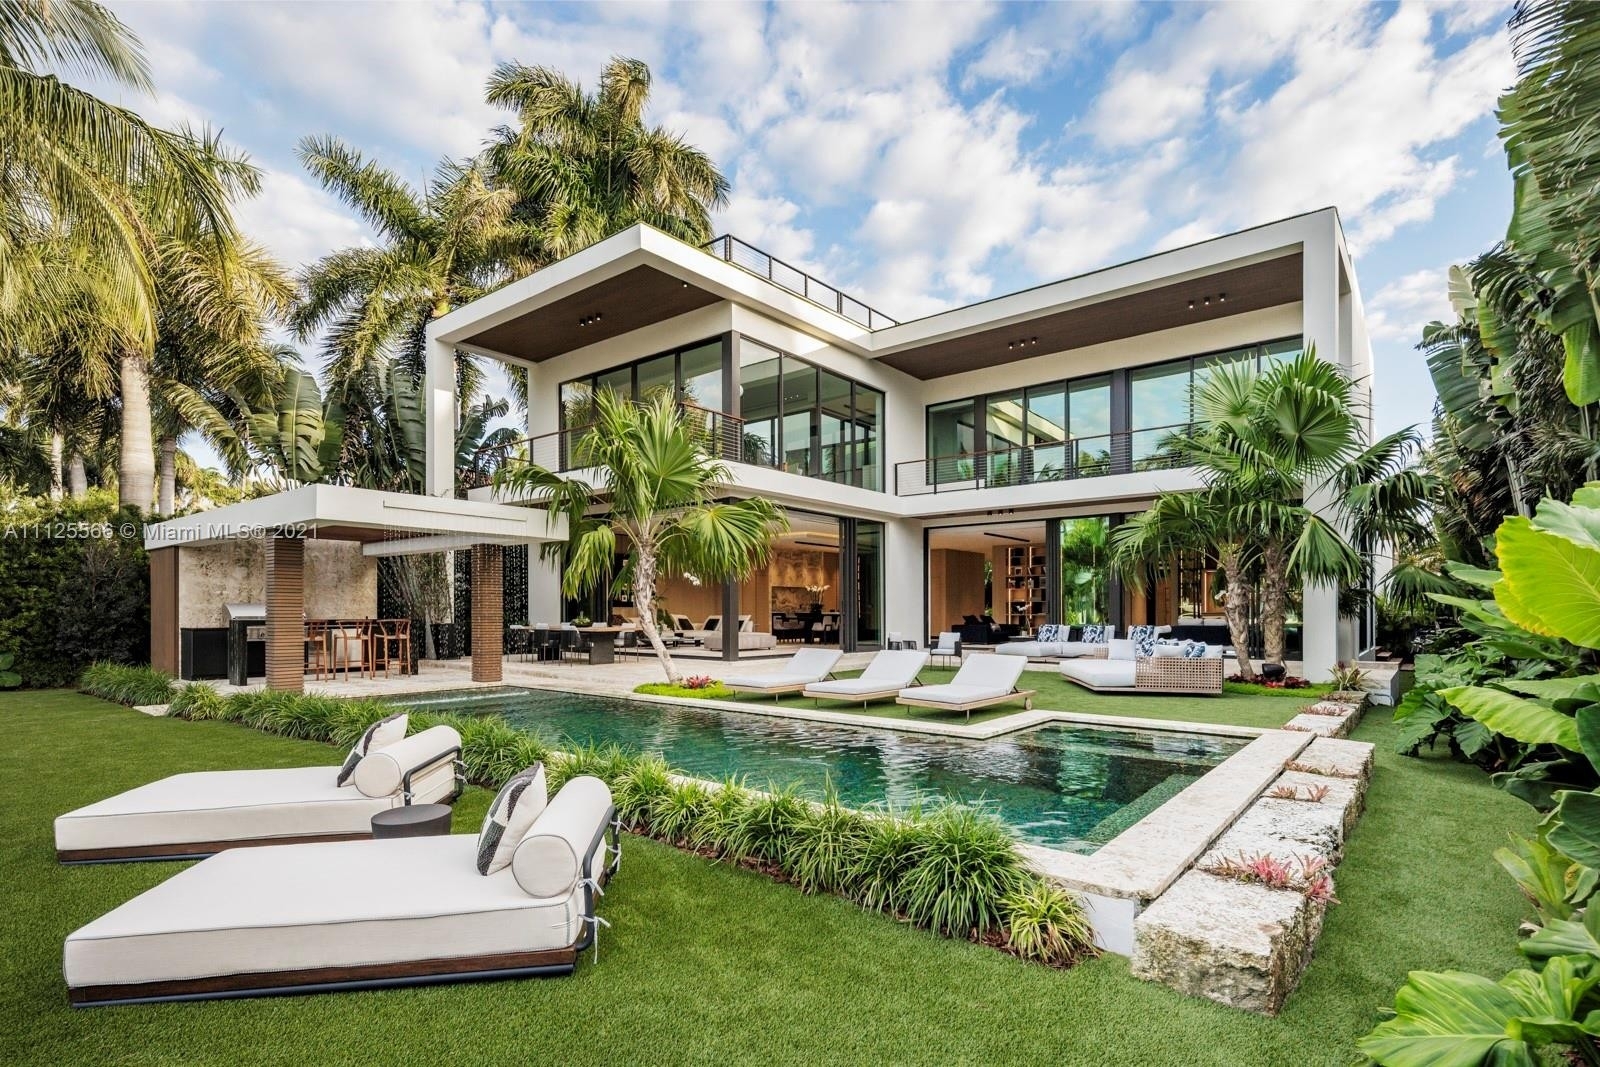 Single Family Home at Miami Beach